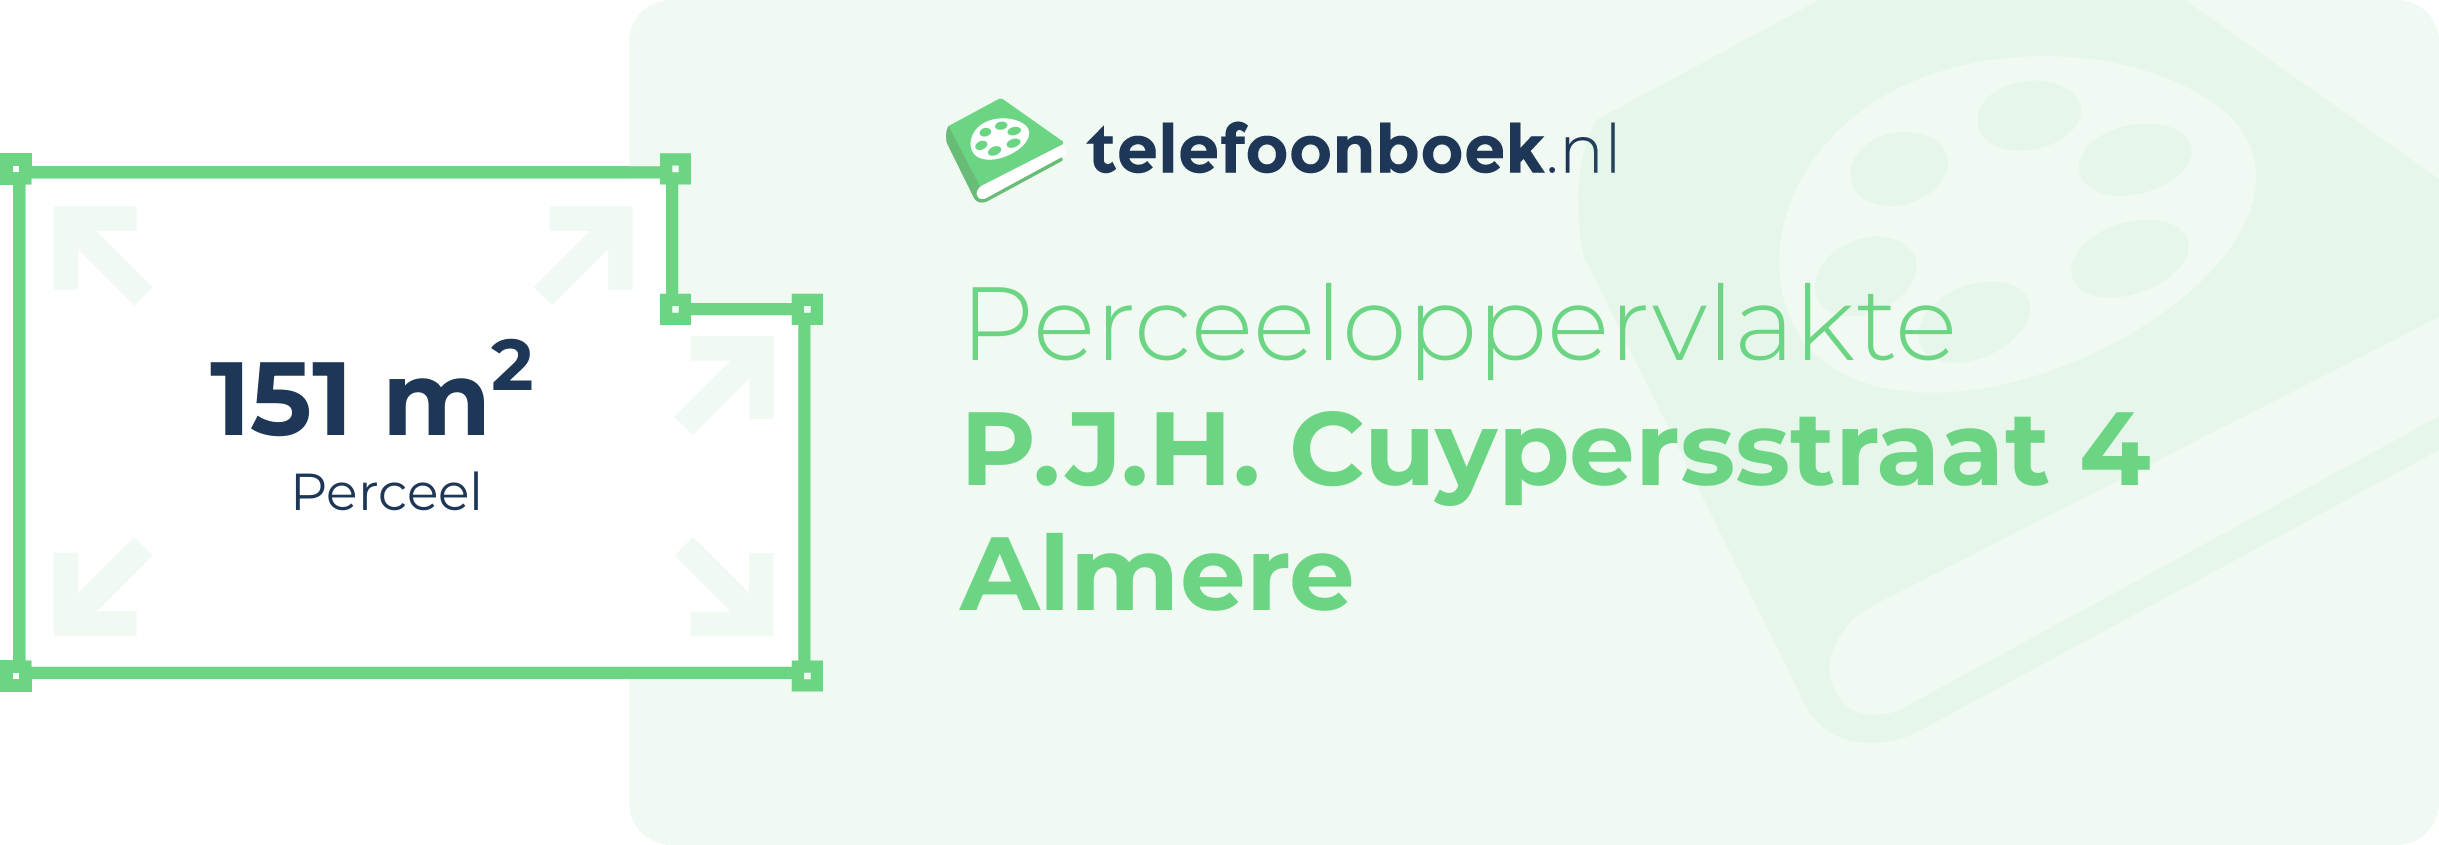 Perceeloppervlakte P.J.H. Cuypersstraat 4 Almere